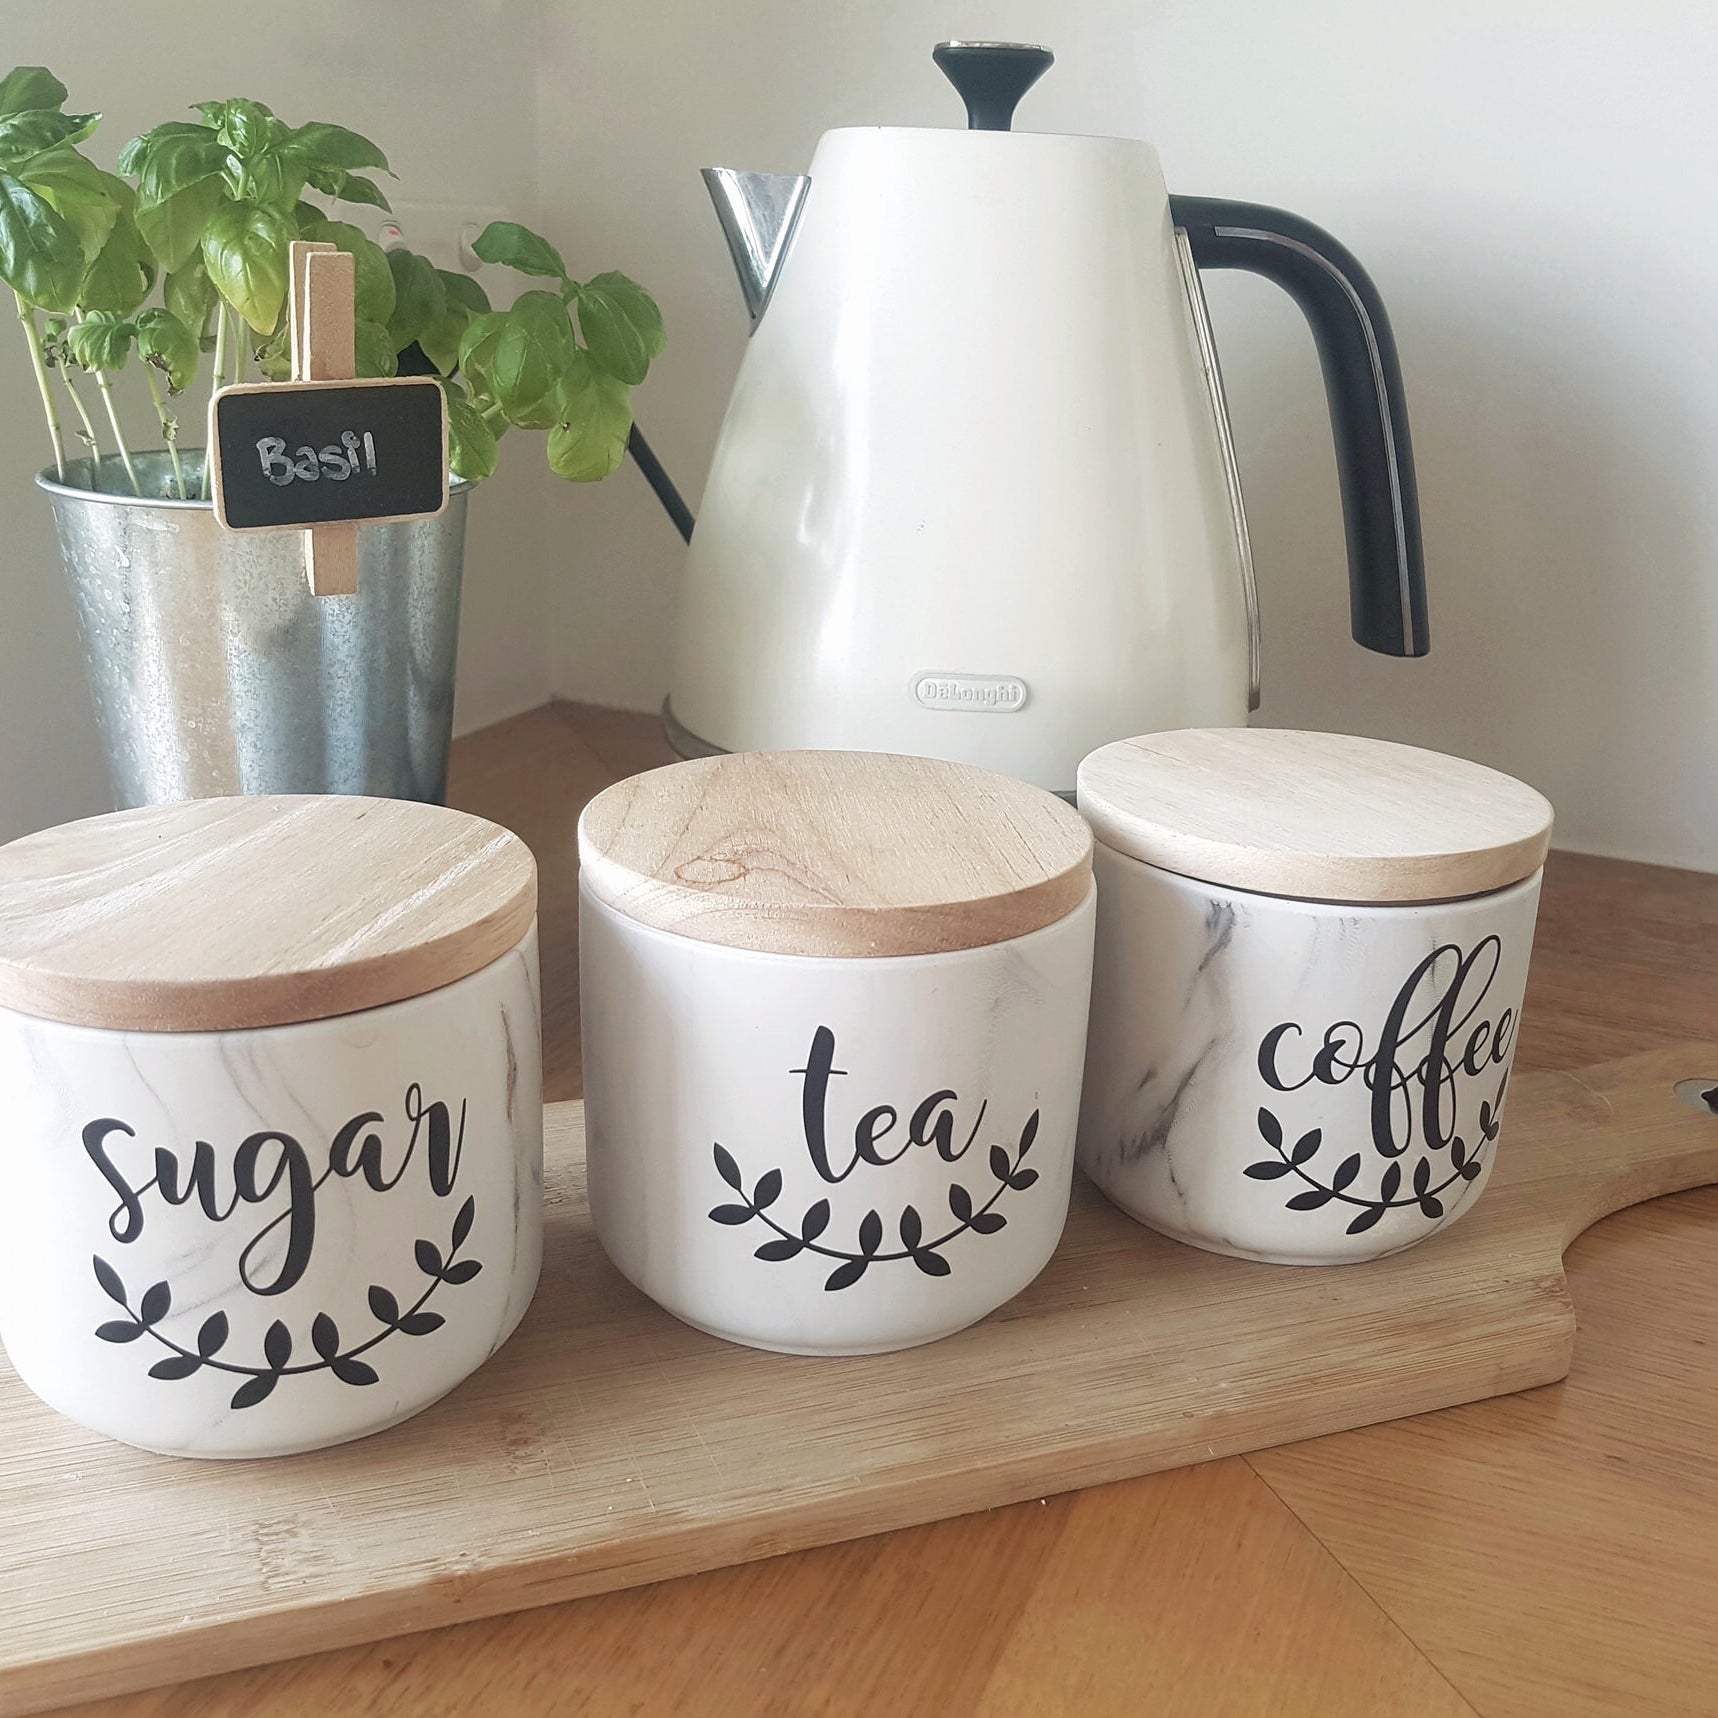 Magnolia Leaf Tea, Coffee Sugar Labels - Pretty Little Designs